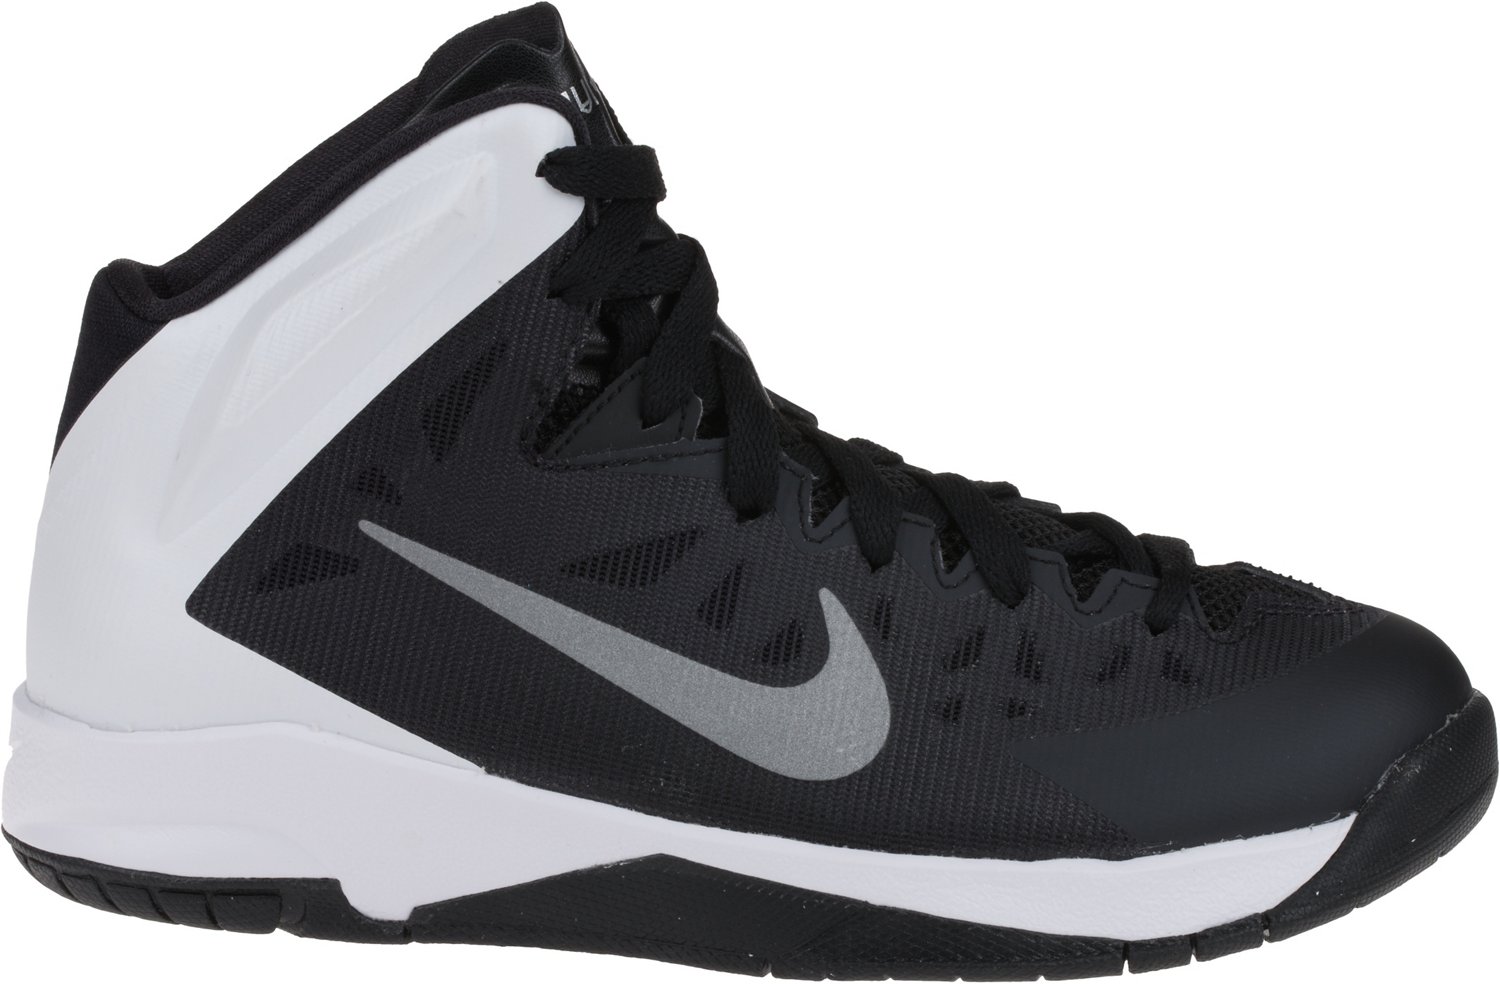 Nike Basketball Shoes Nike Boys Hyper Quickness